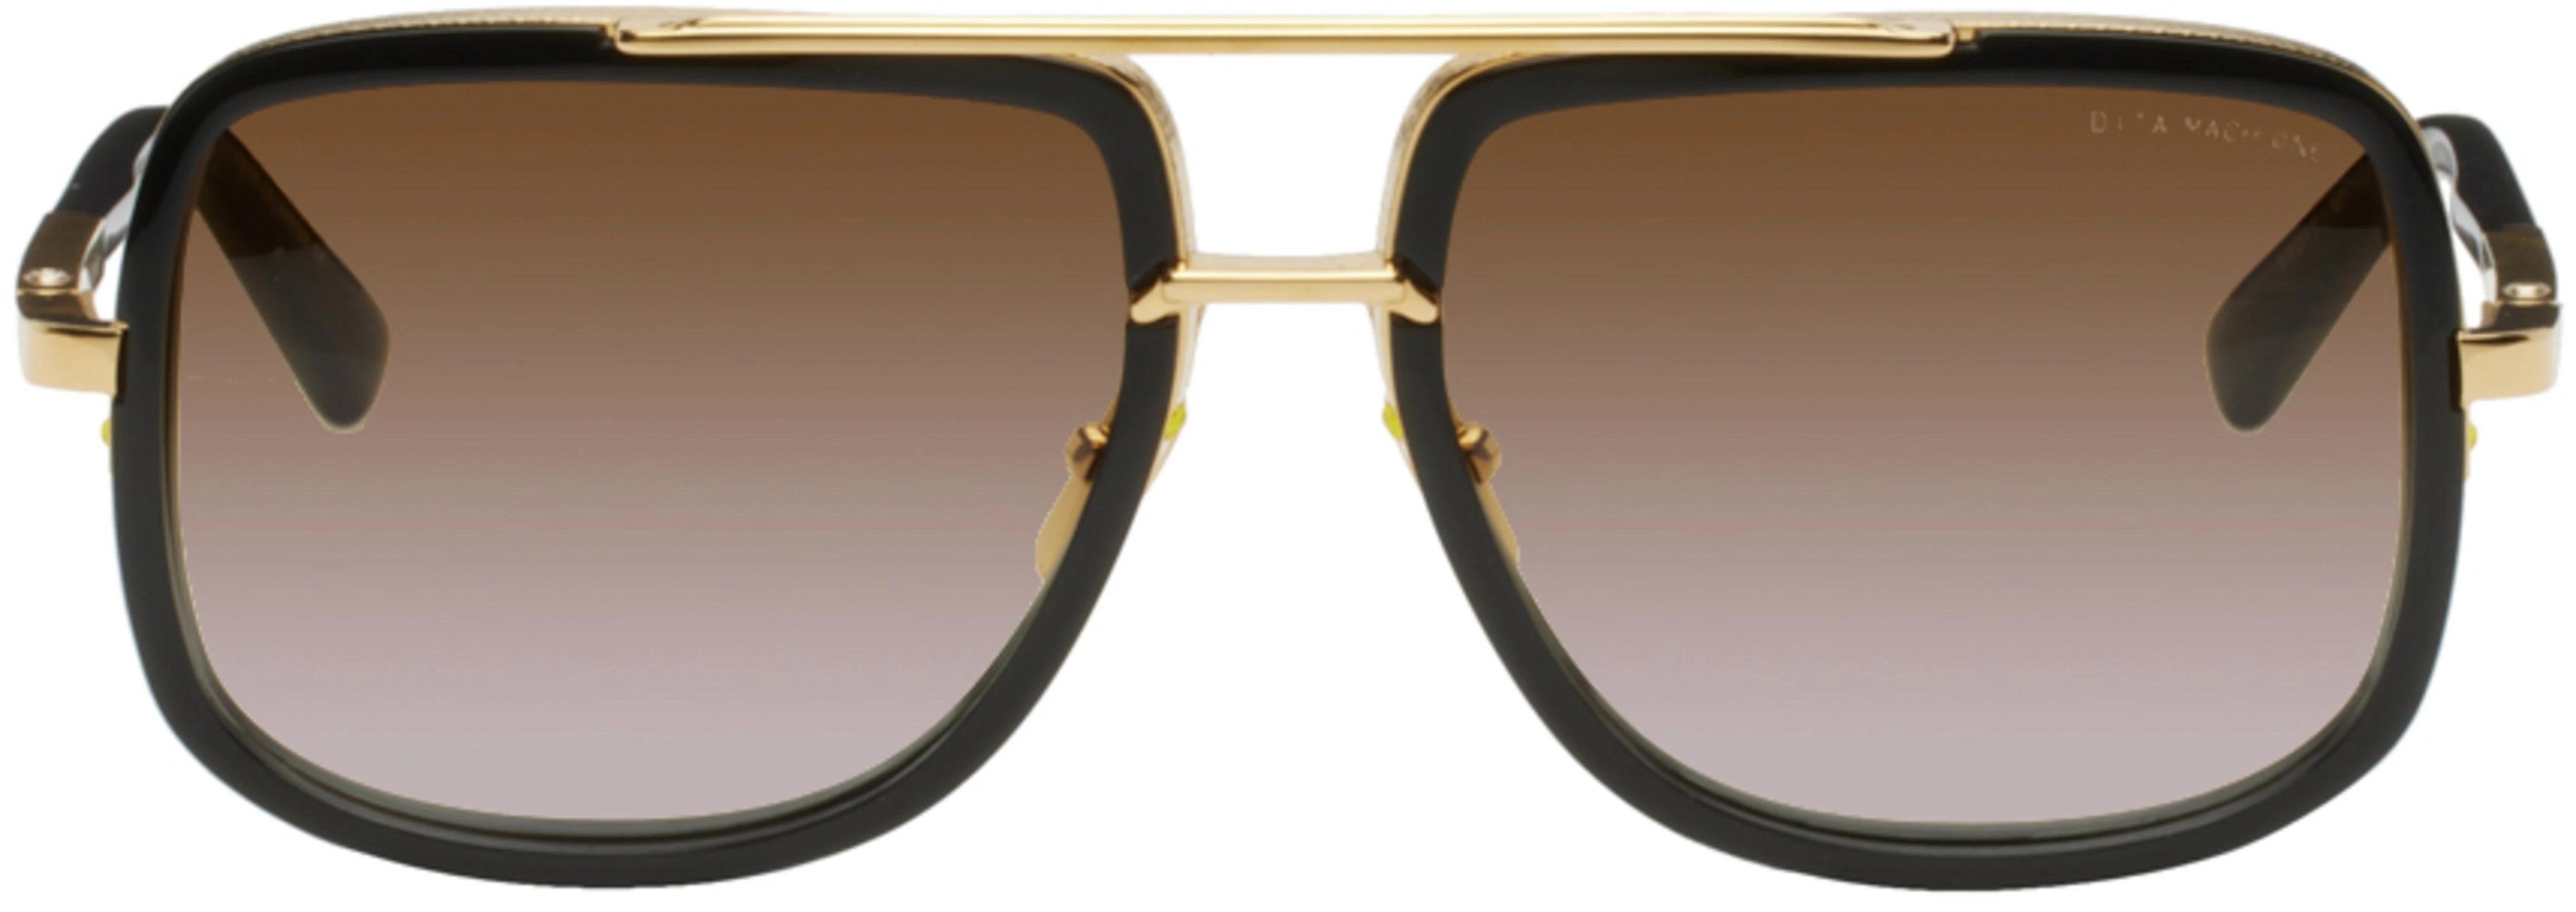 Black & Gold Mach-One Sunglasses by DITA